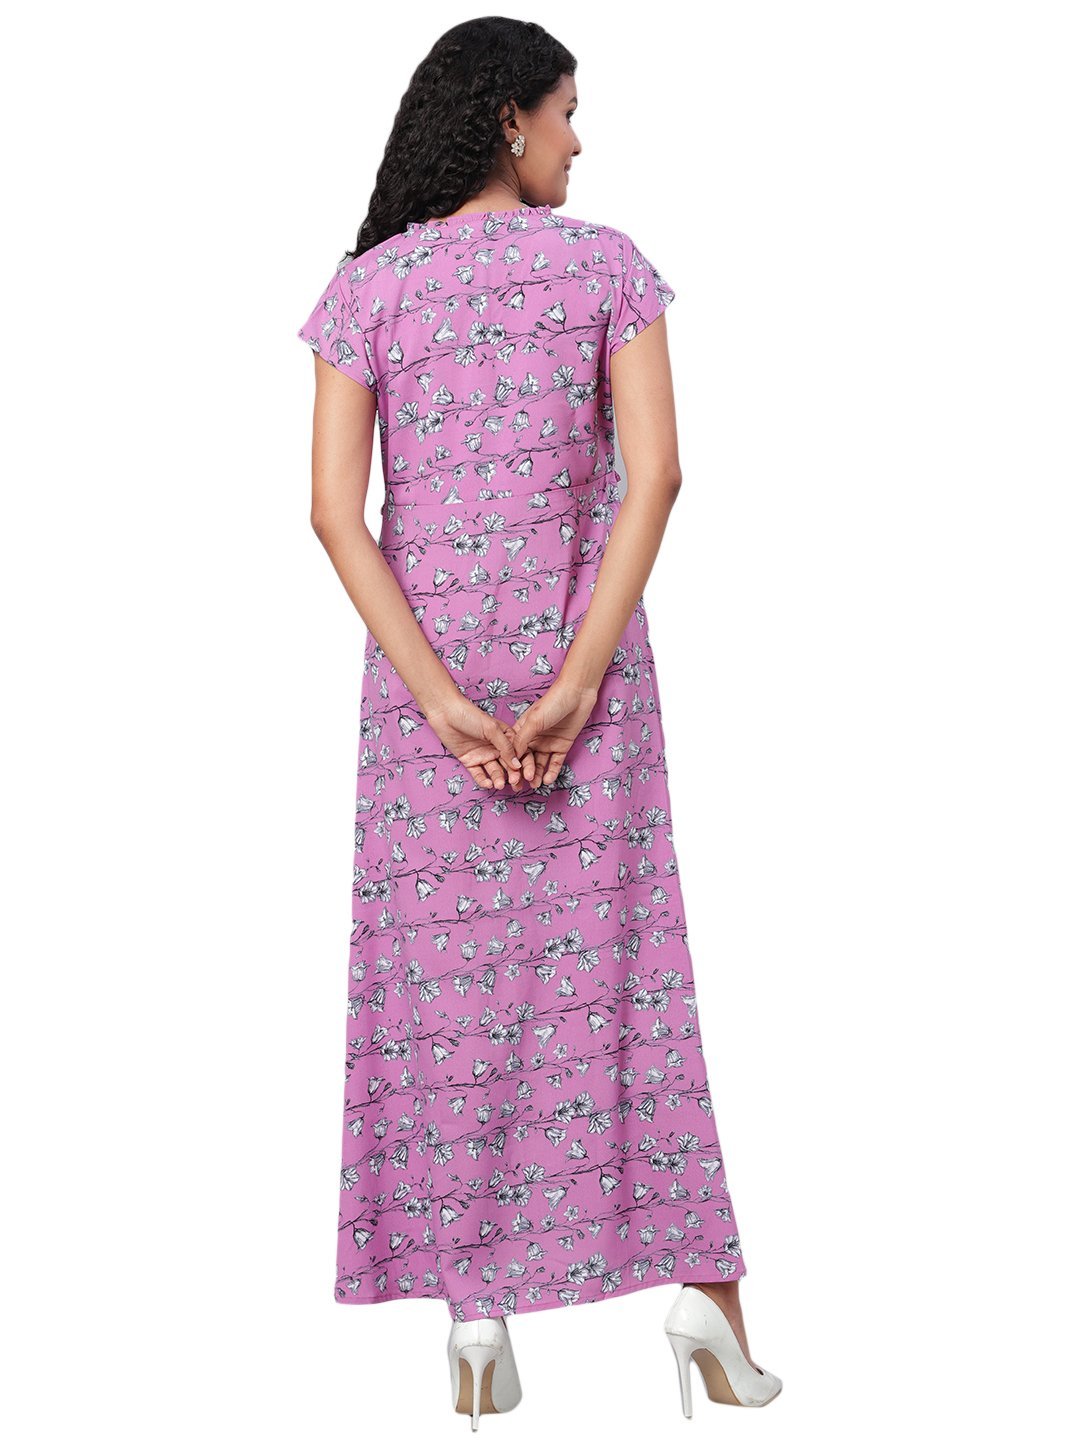 Women's Purple Printed Short Sleeve Polyester V Neck Casual Dress - Myshka